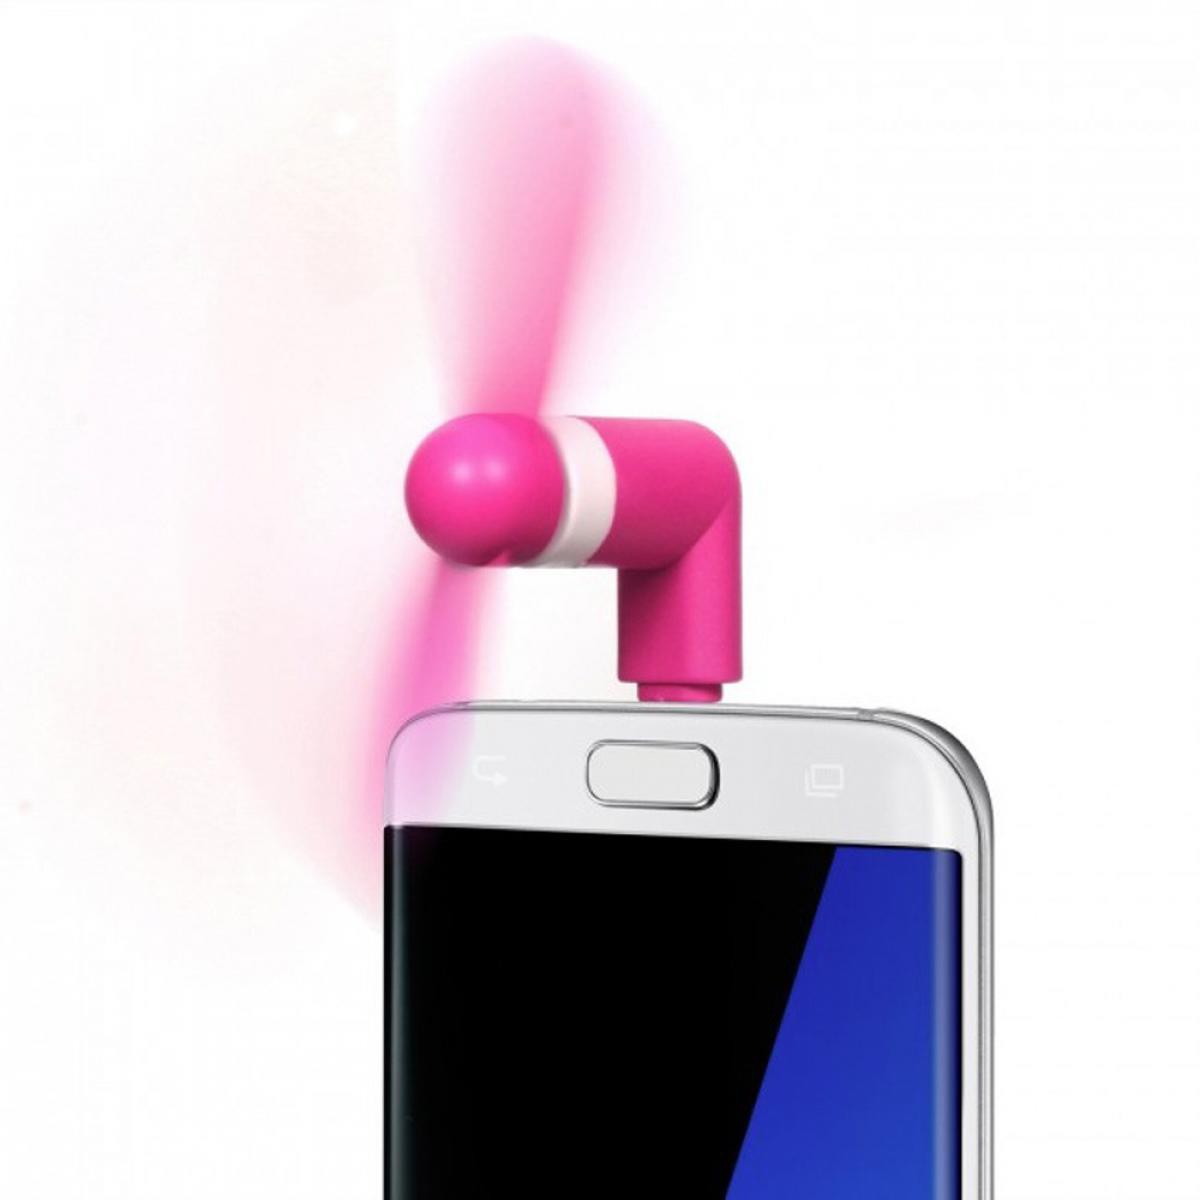 Shot - Mini Ventilateur Micro USB pour SAMSUNG Galaxy A10 Smartphone Android Silencieux Rafraichie (ROSE) - Autres accessoires smartphone